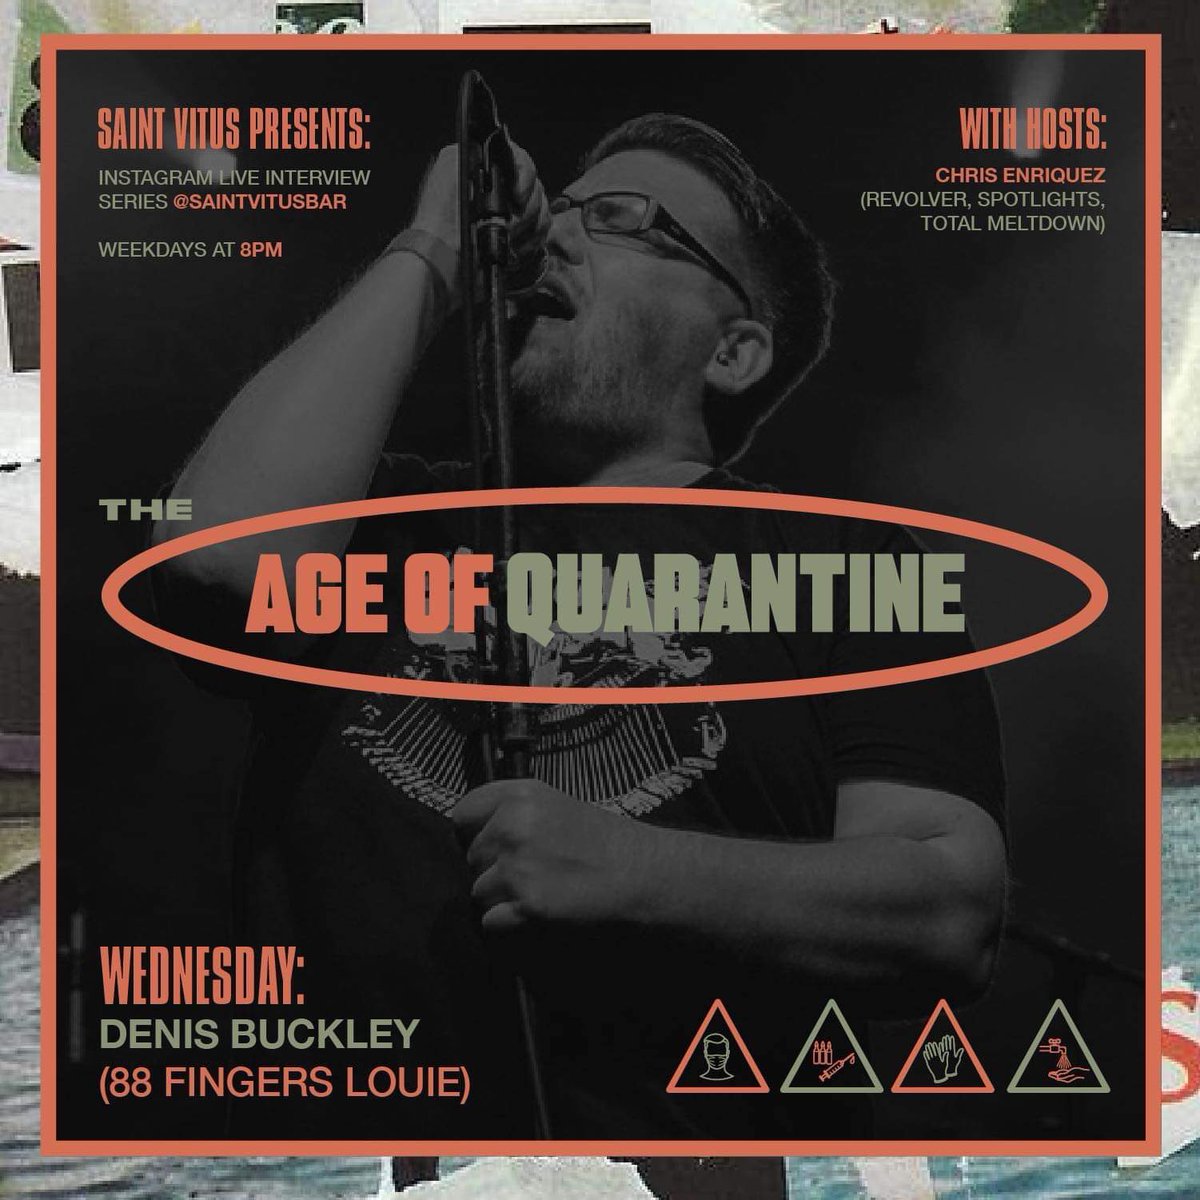 This Wednesday, I’ll be gabbin’ with my pal Arty on #ageofquarantine via @saintvitusbar IG live at 8pm EST.